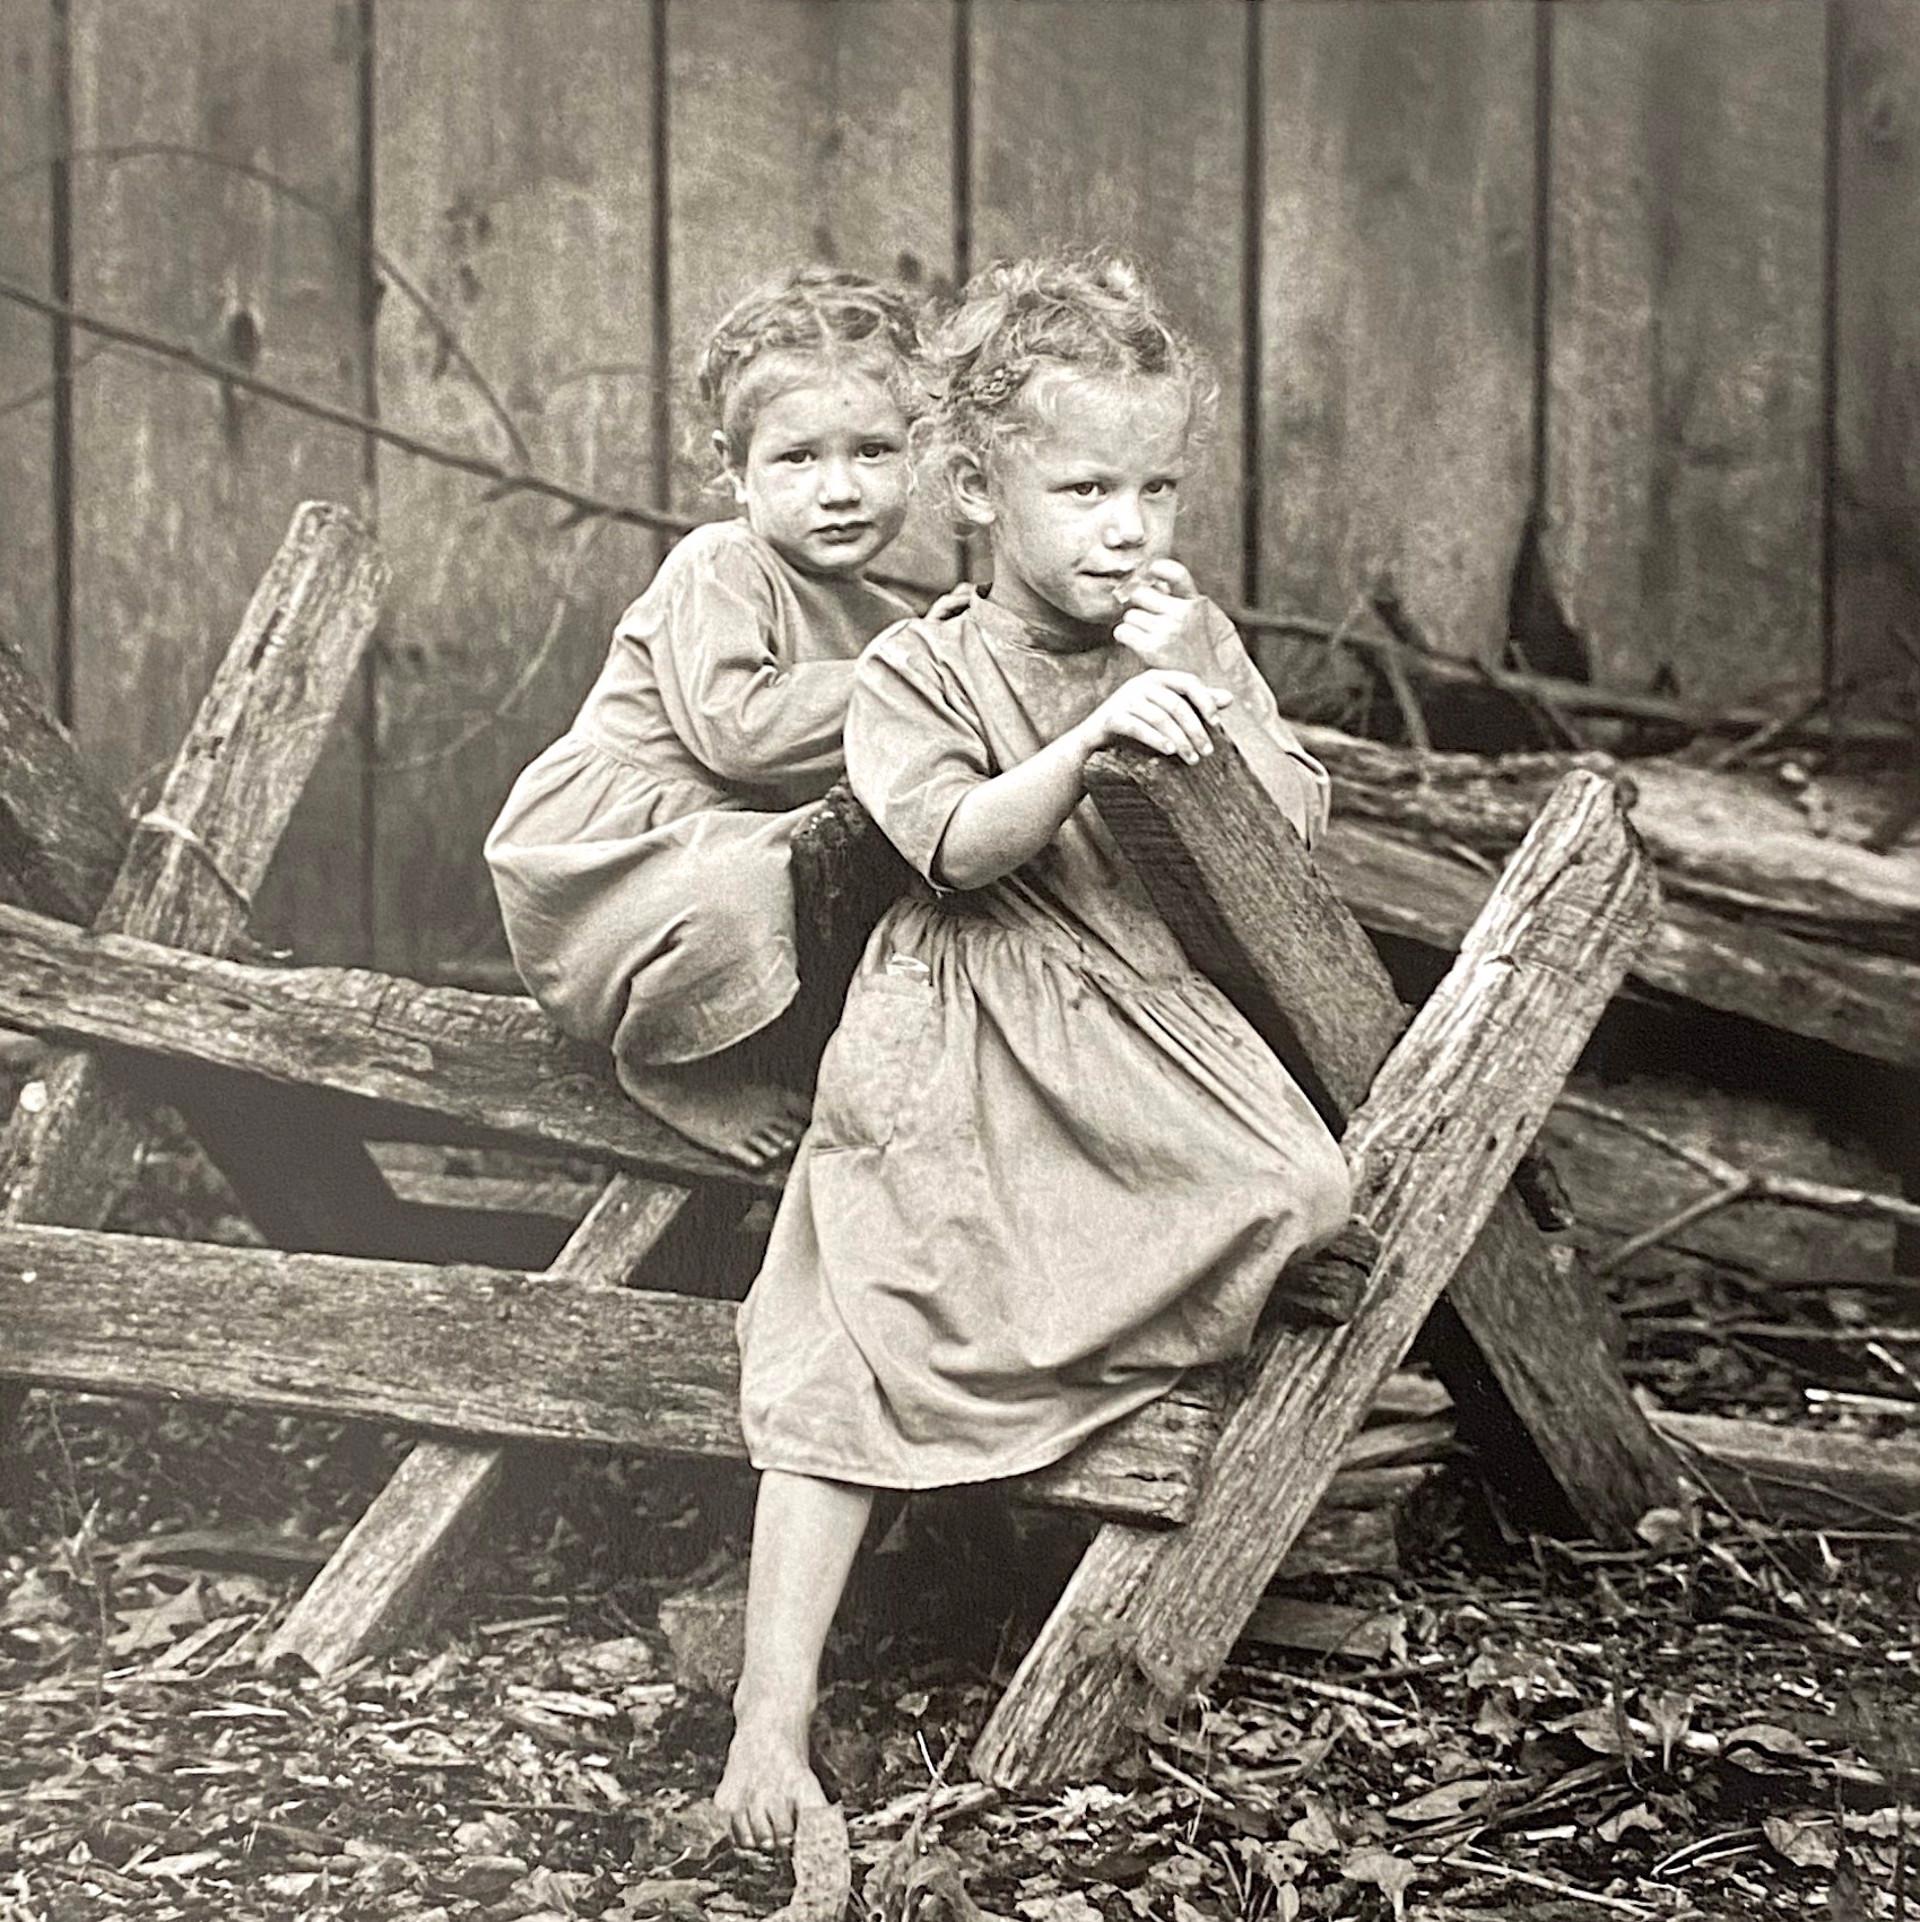 Don Dudenbostel Abstract Photograph - Two Appalachian Children (Circa Late 70s)